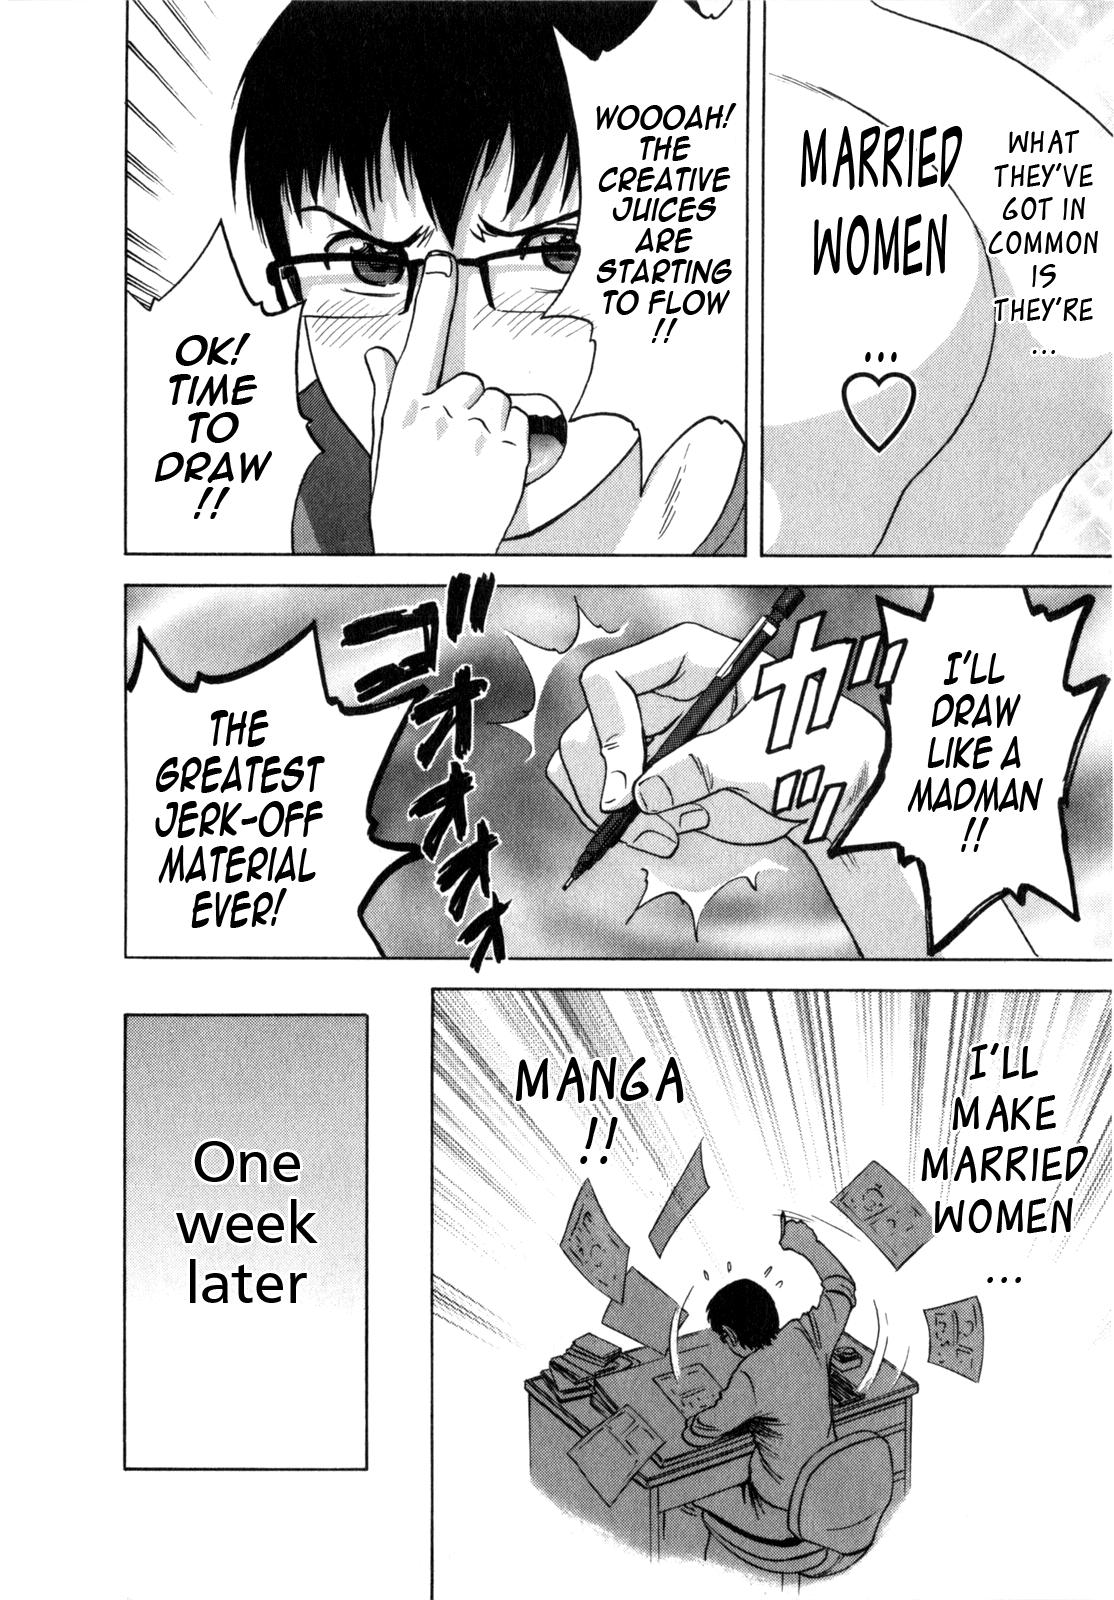 [Hidemaru] Life with Married Women Just Like a Manga 1 - Ch. 1-7 [English] {Tadanohito} 69